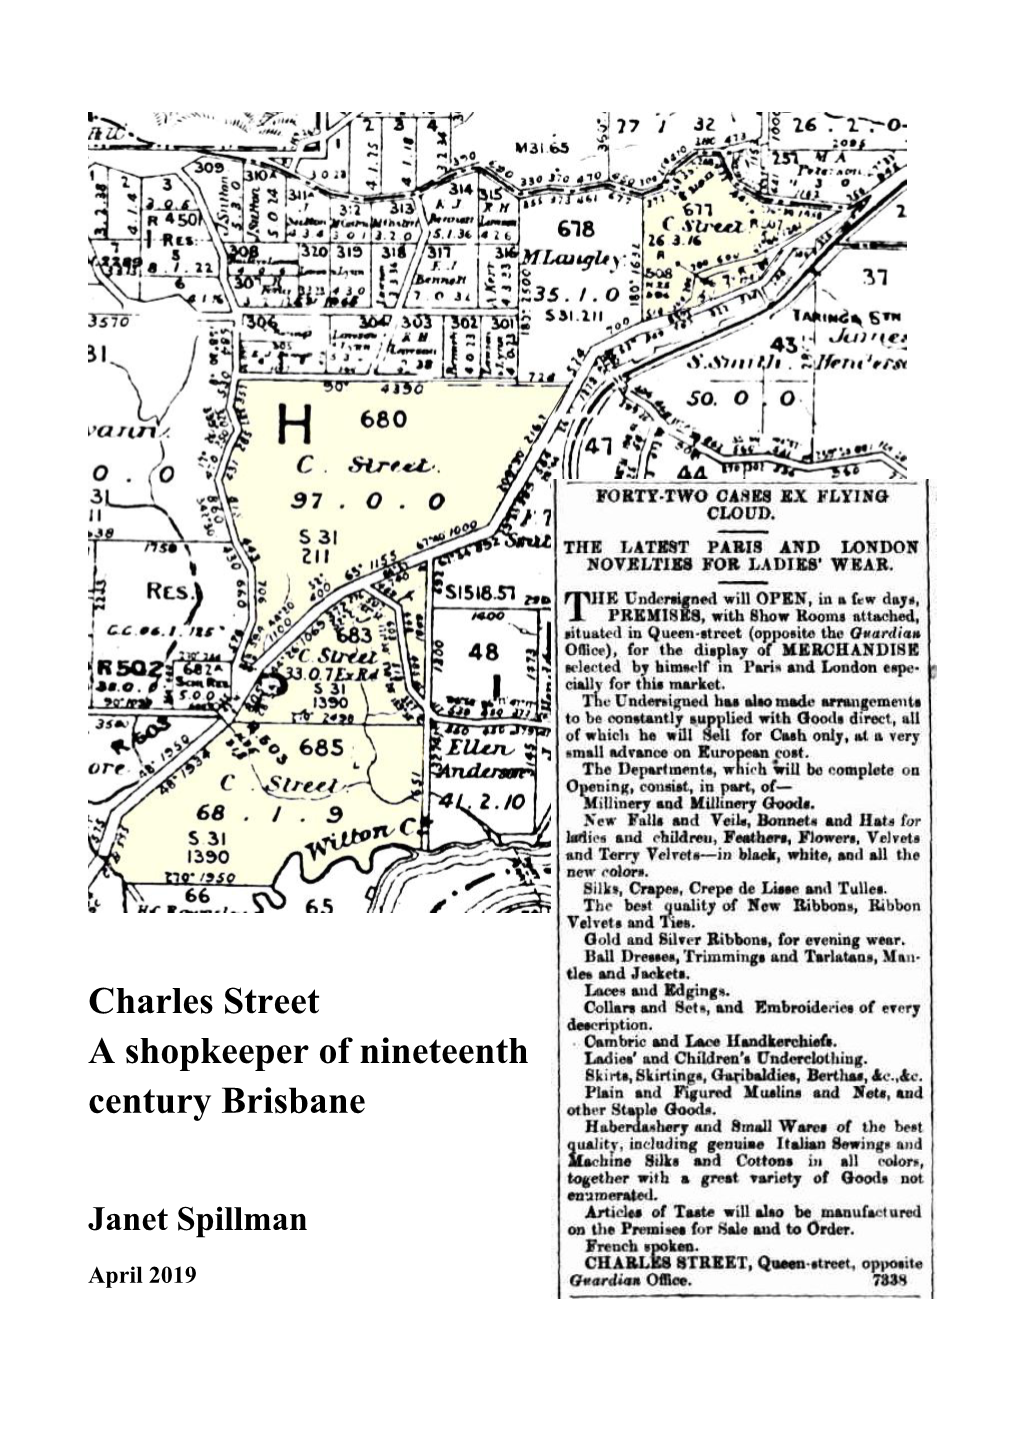 Charles Street a Shopkeeper of Nineteenth Century Brisbane